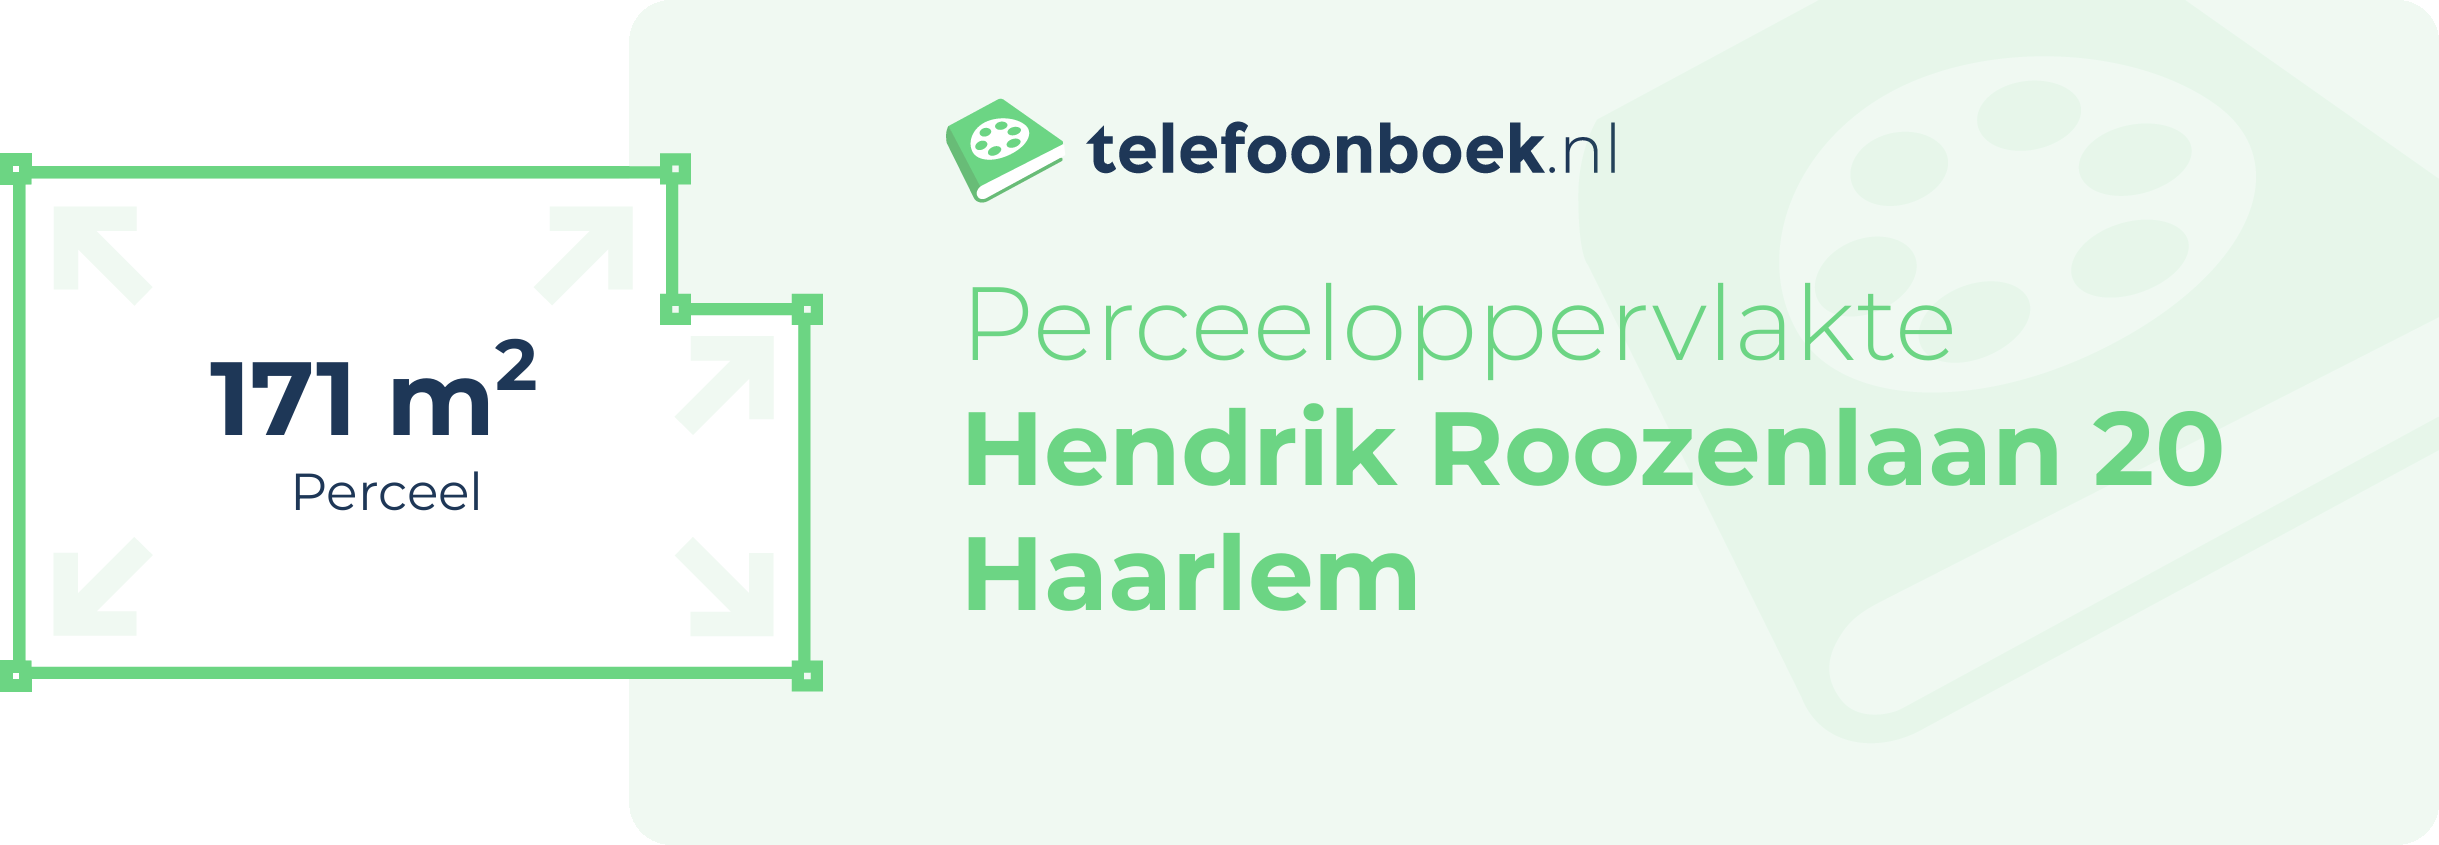 Perceeloppervlakte Hendrik Roozenlaan 20 Haarlem